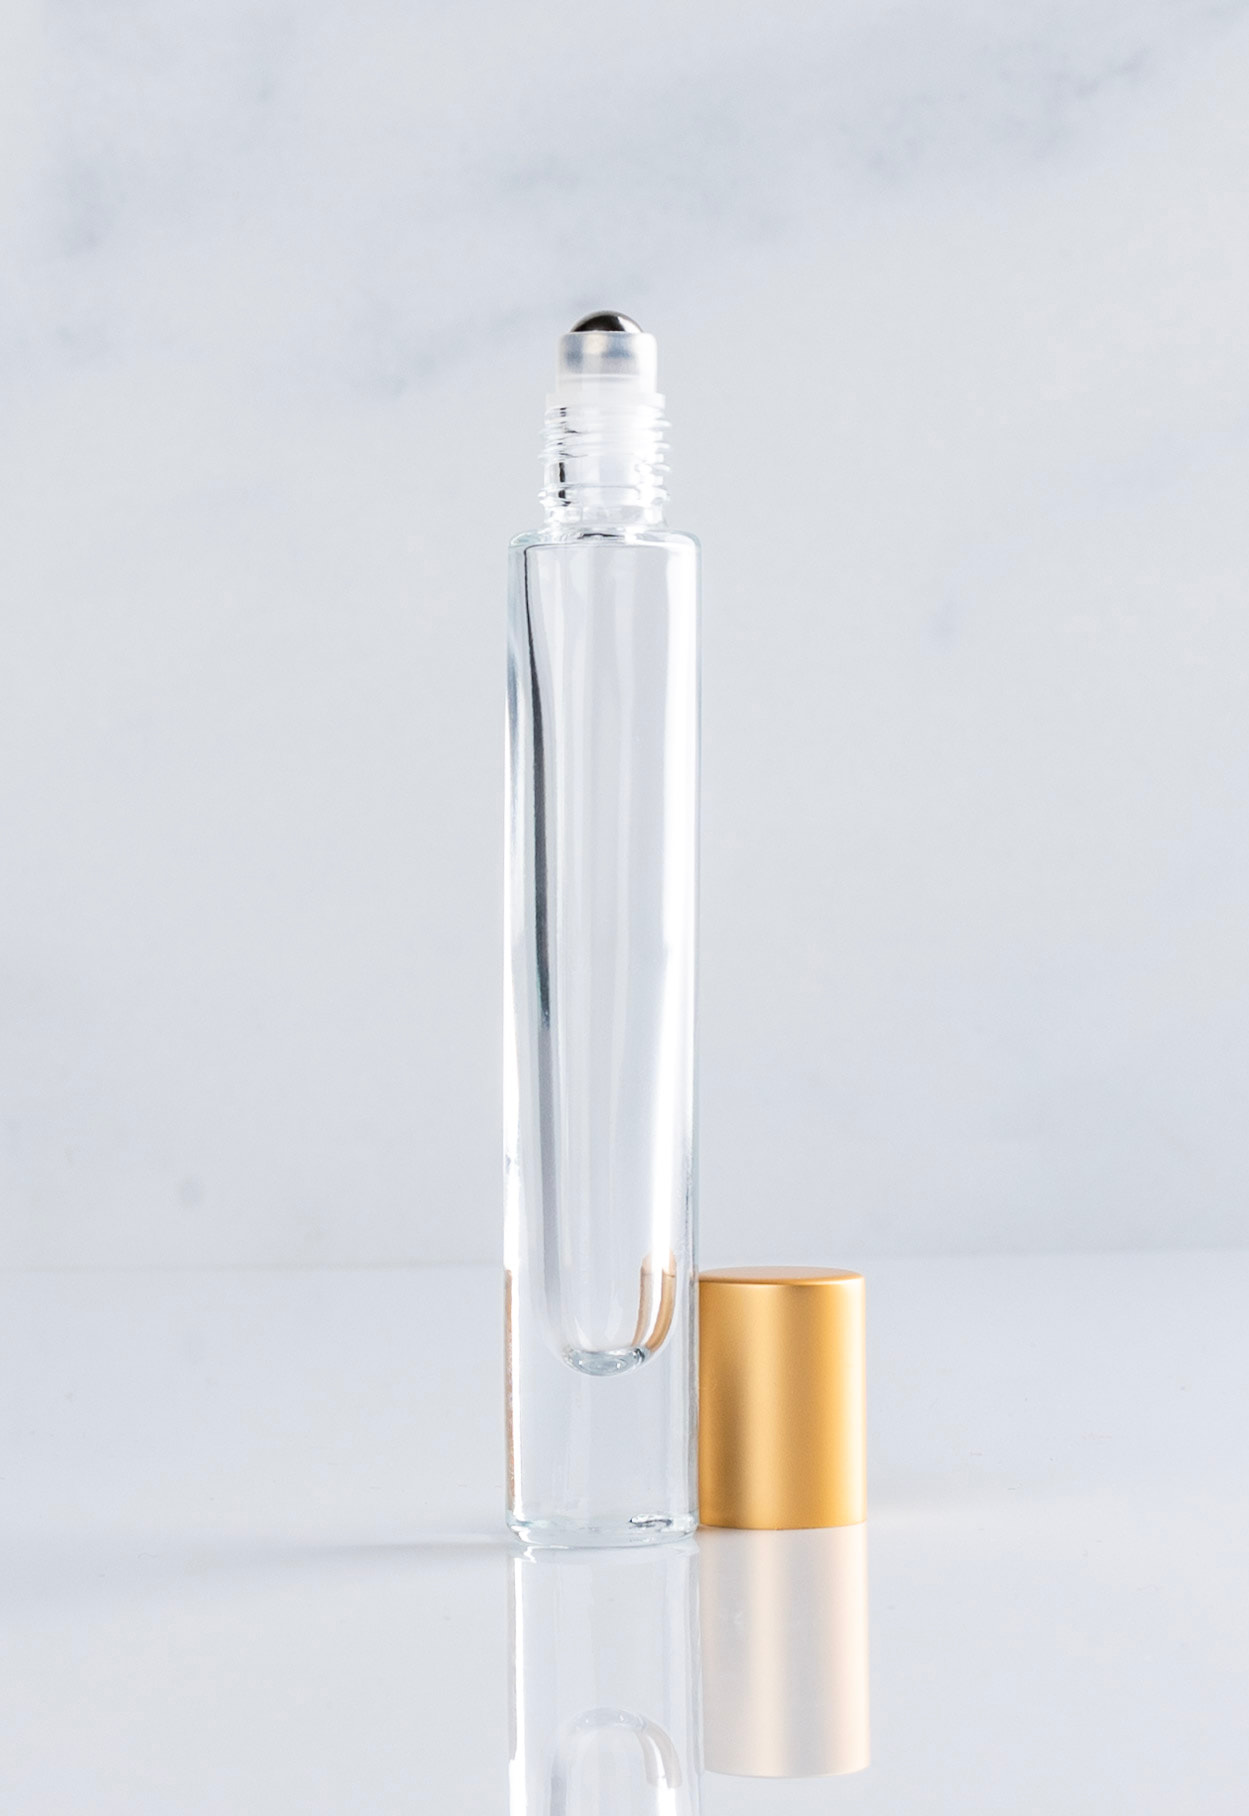 temple perfume oil - amber